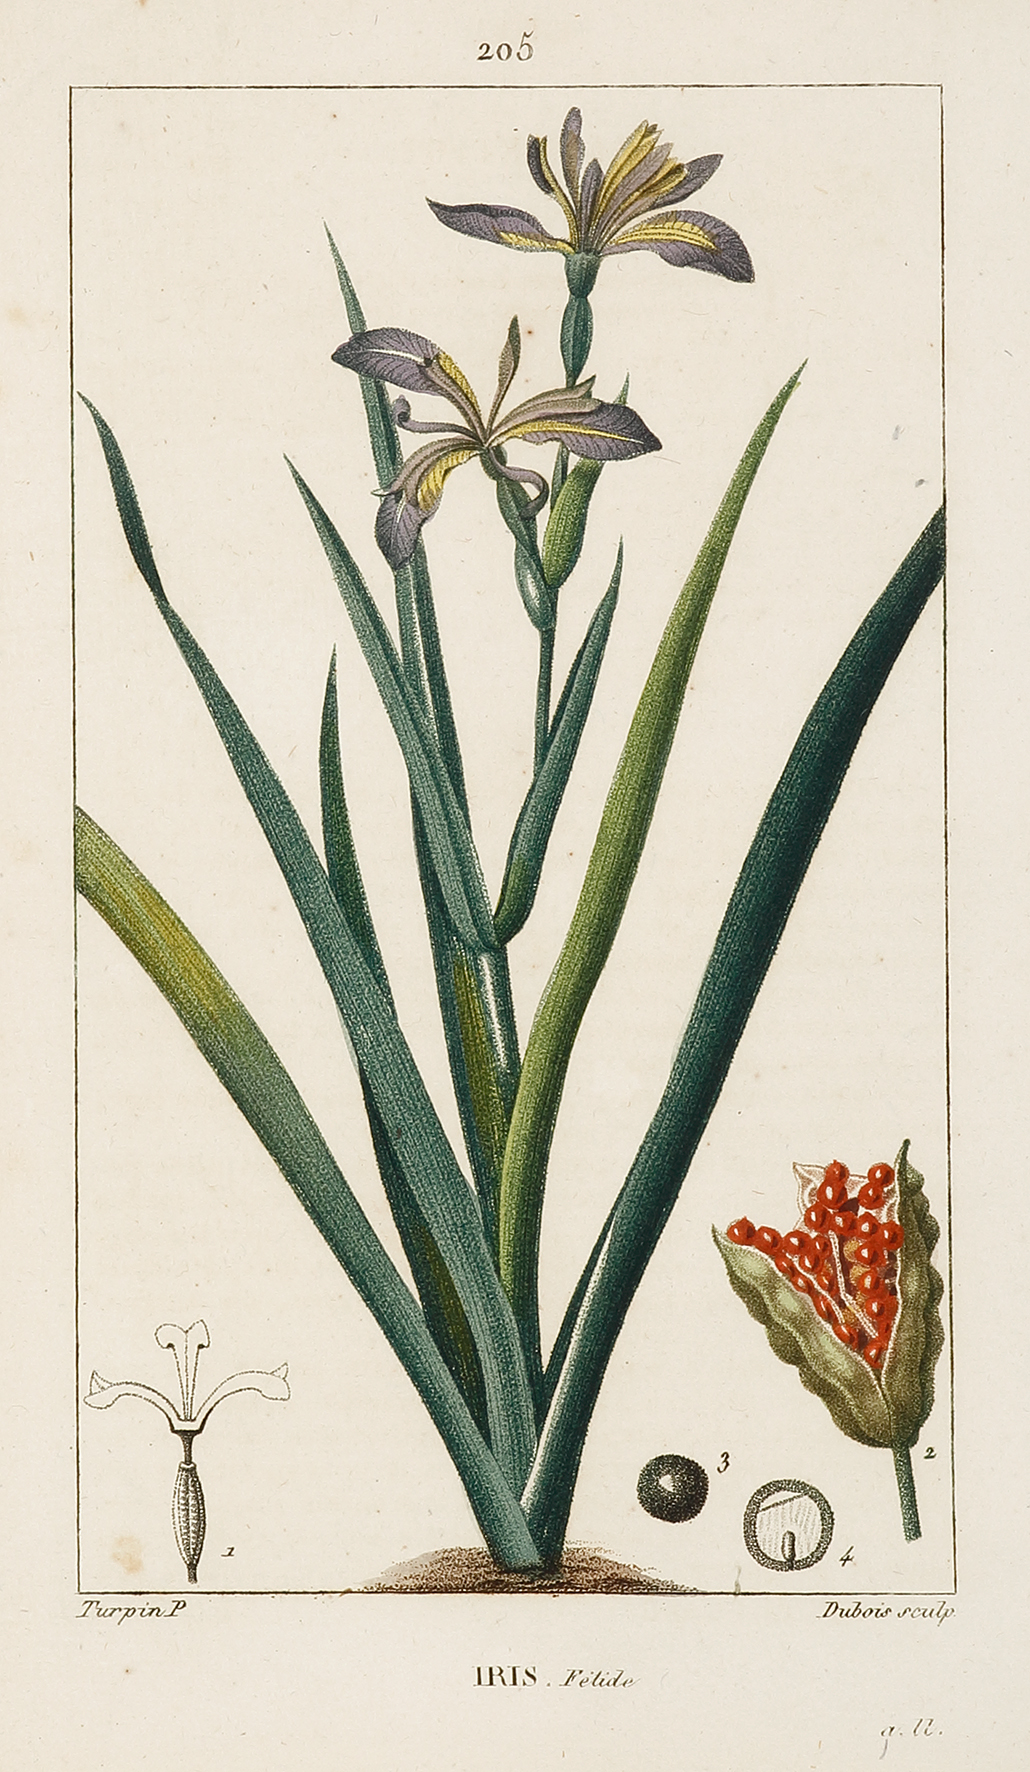 Iris. Felide - Antique Print from 1816